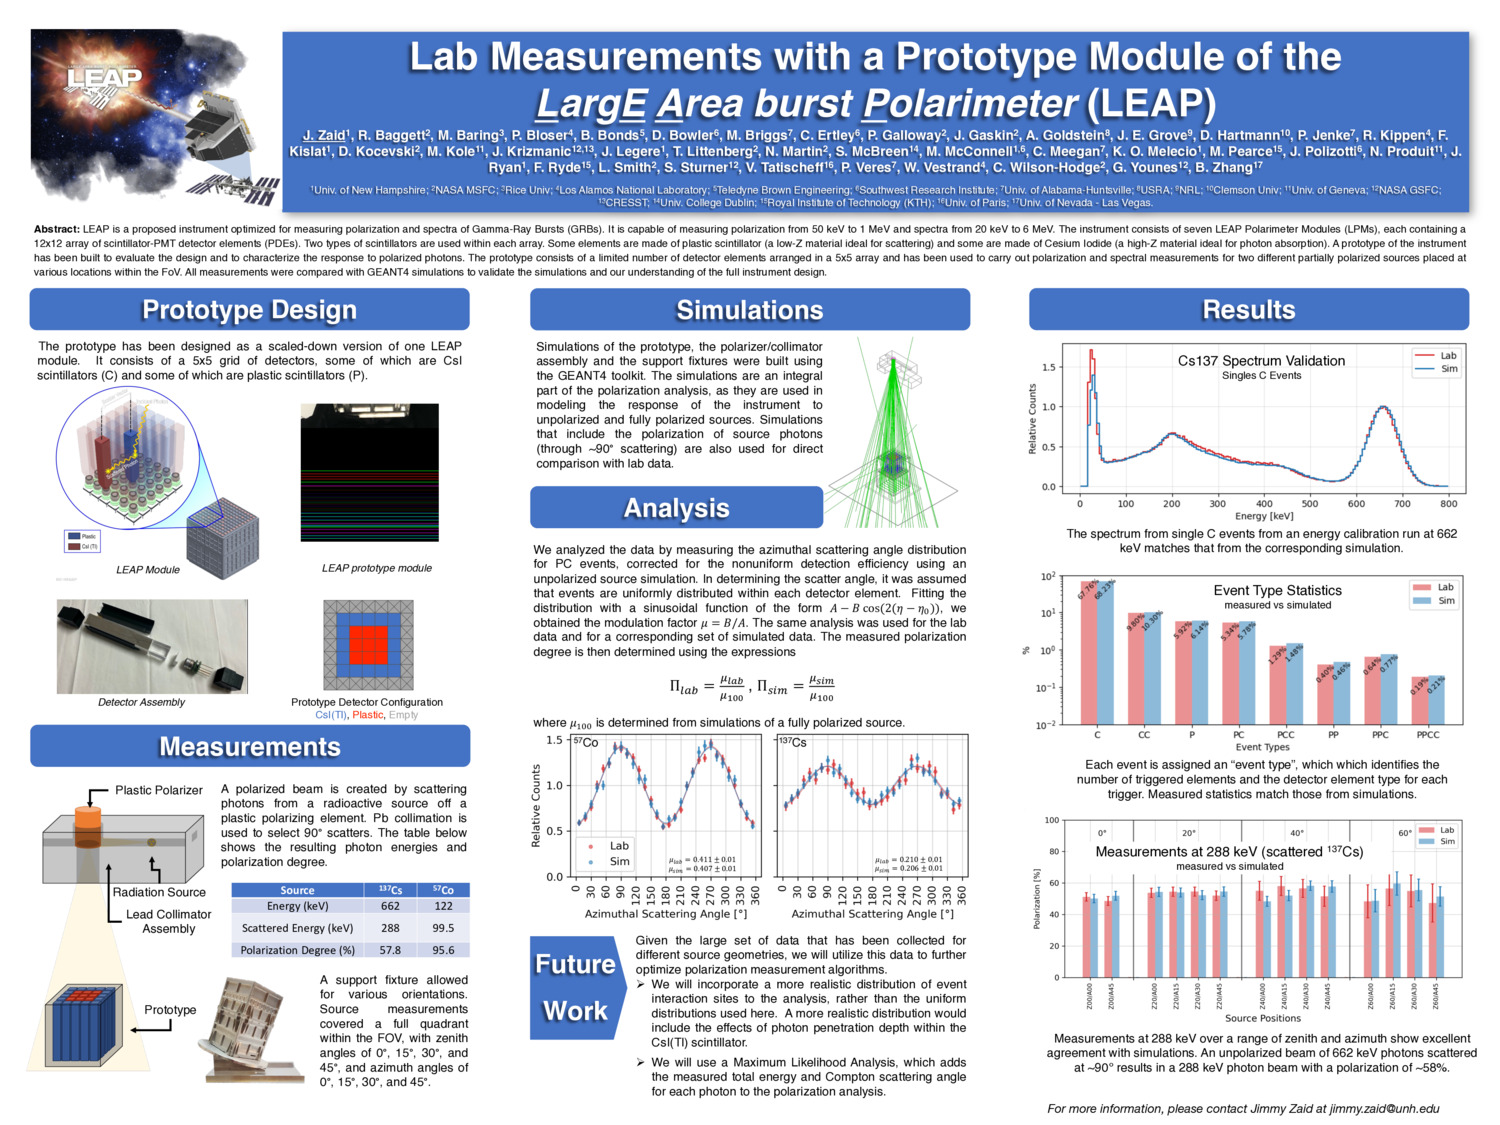 Lab Measurements With A Prototype Module Of Leap by BlackHoleDude